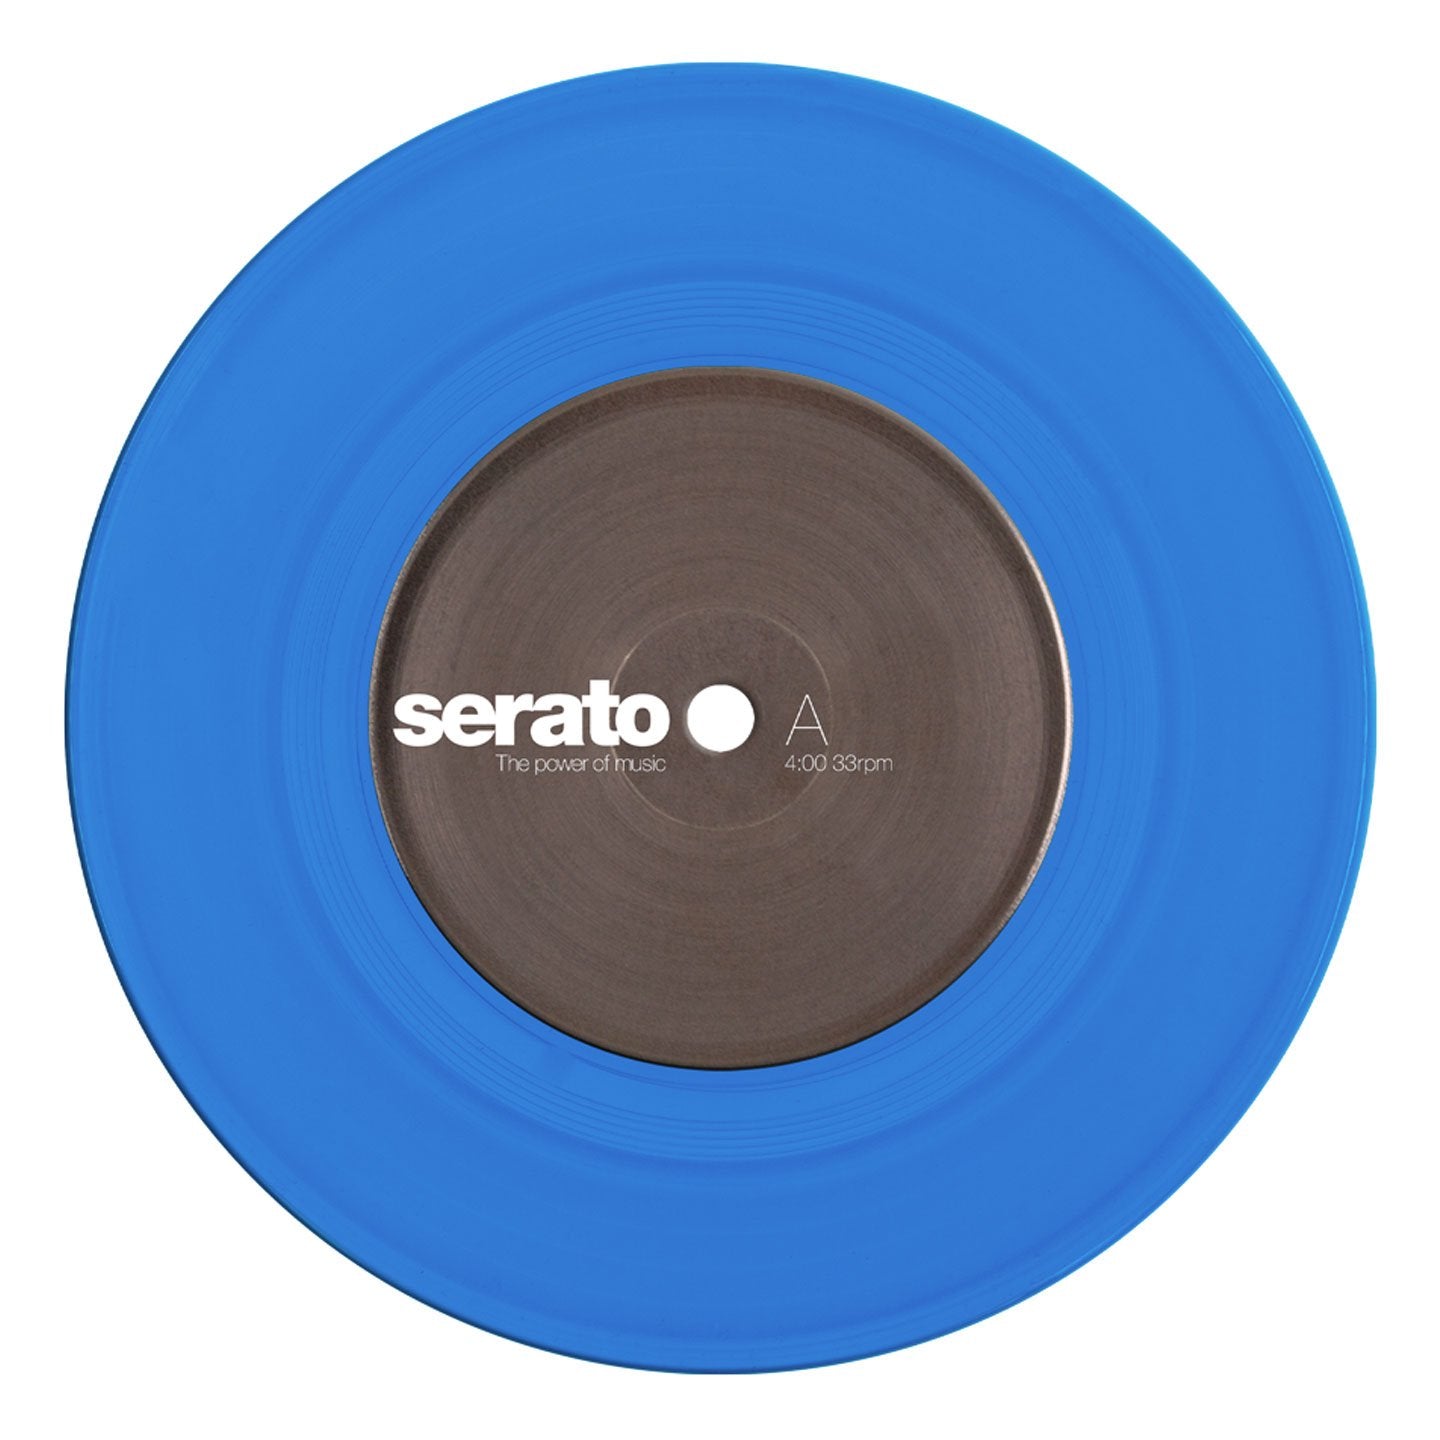 Serato: Performance Series Control Vinyl 2x7" - Blue